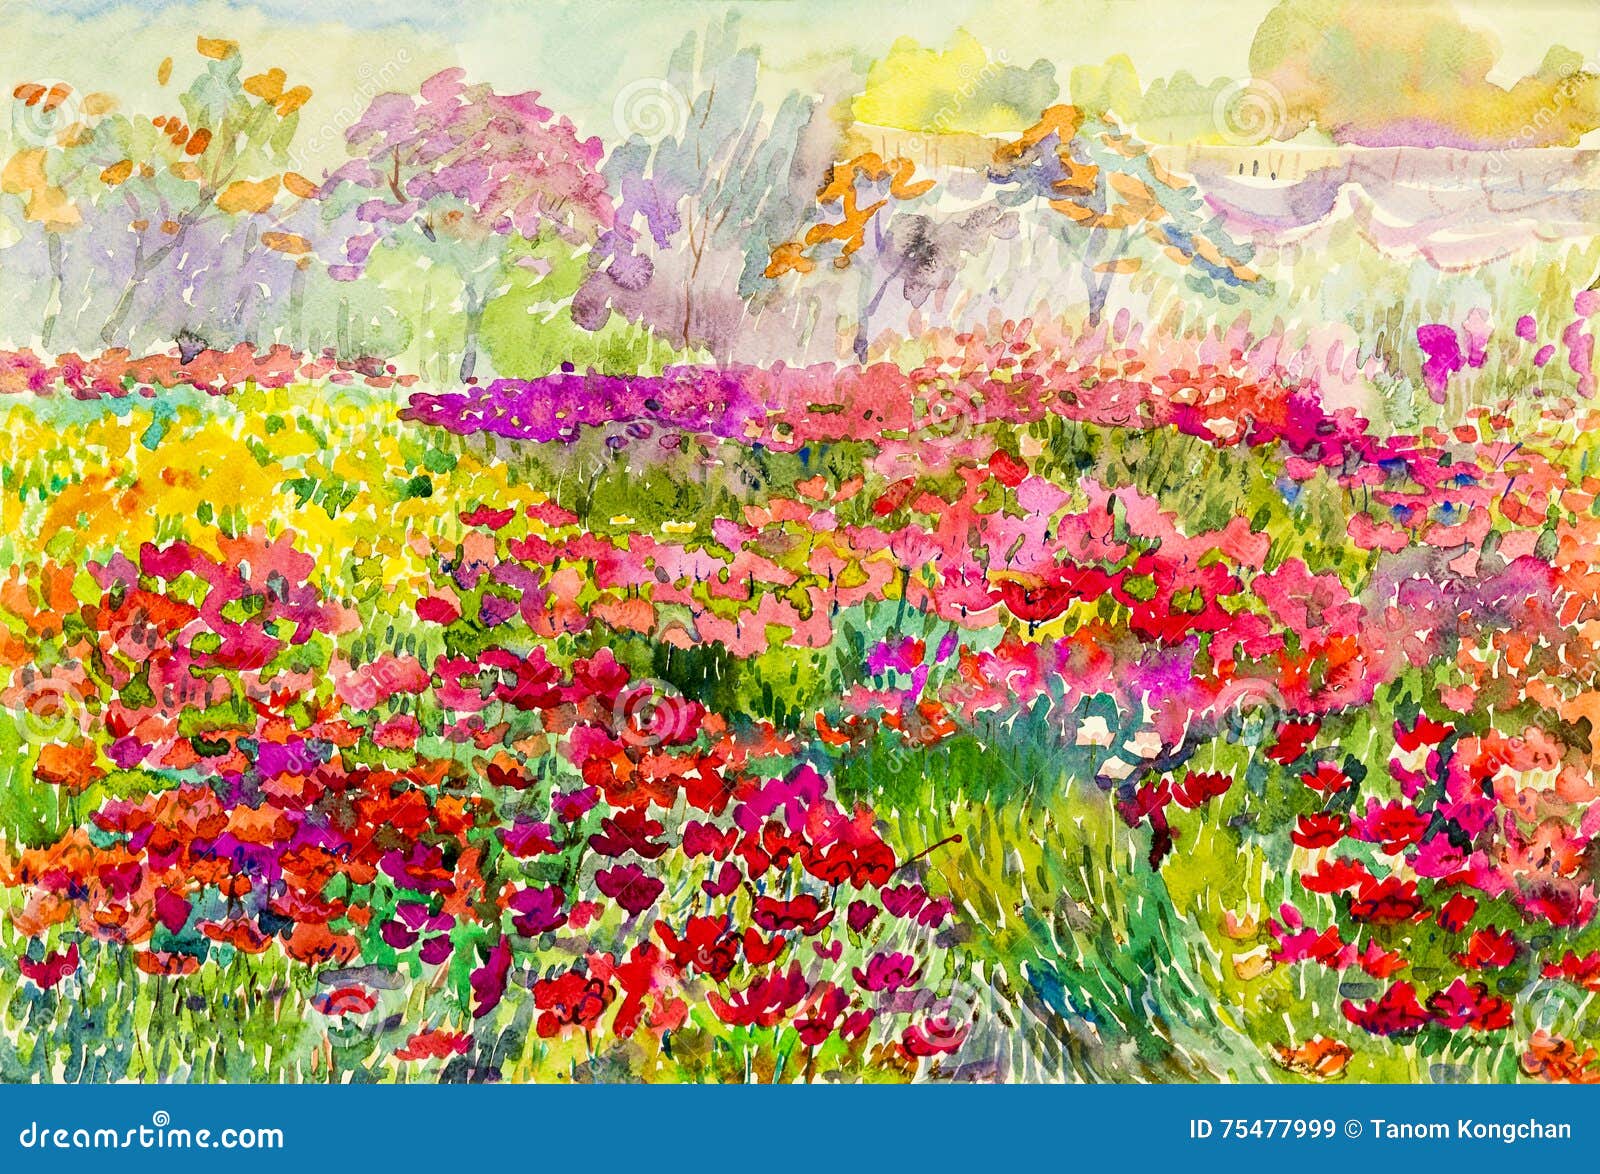 Watercolor Painting Original Landscape Colorful of Flowers Fields ...